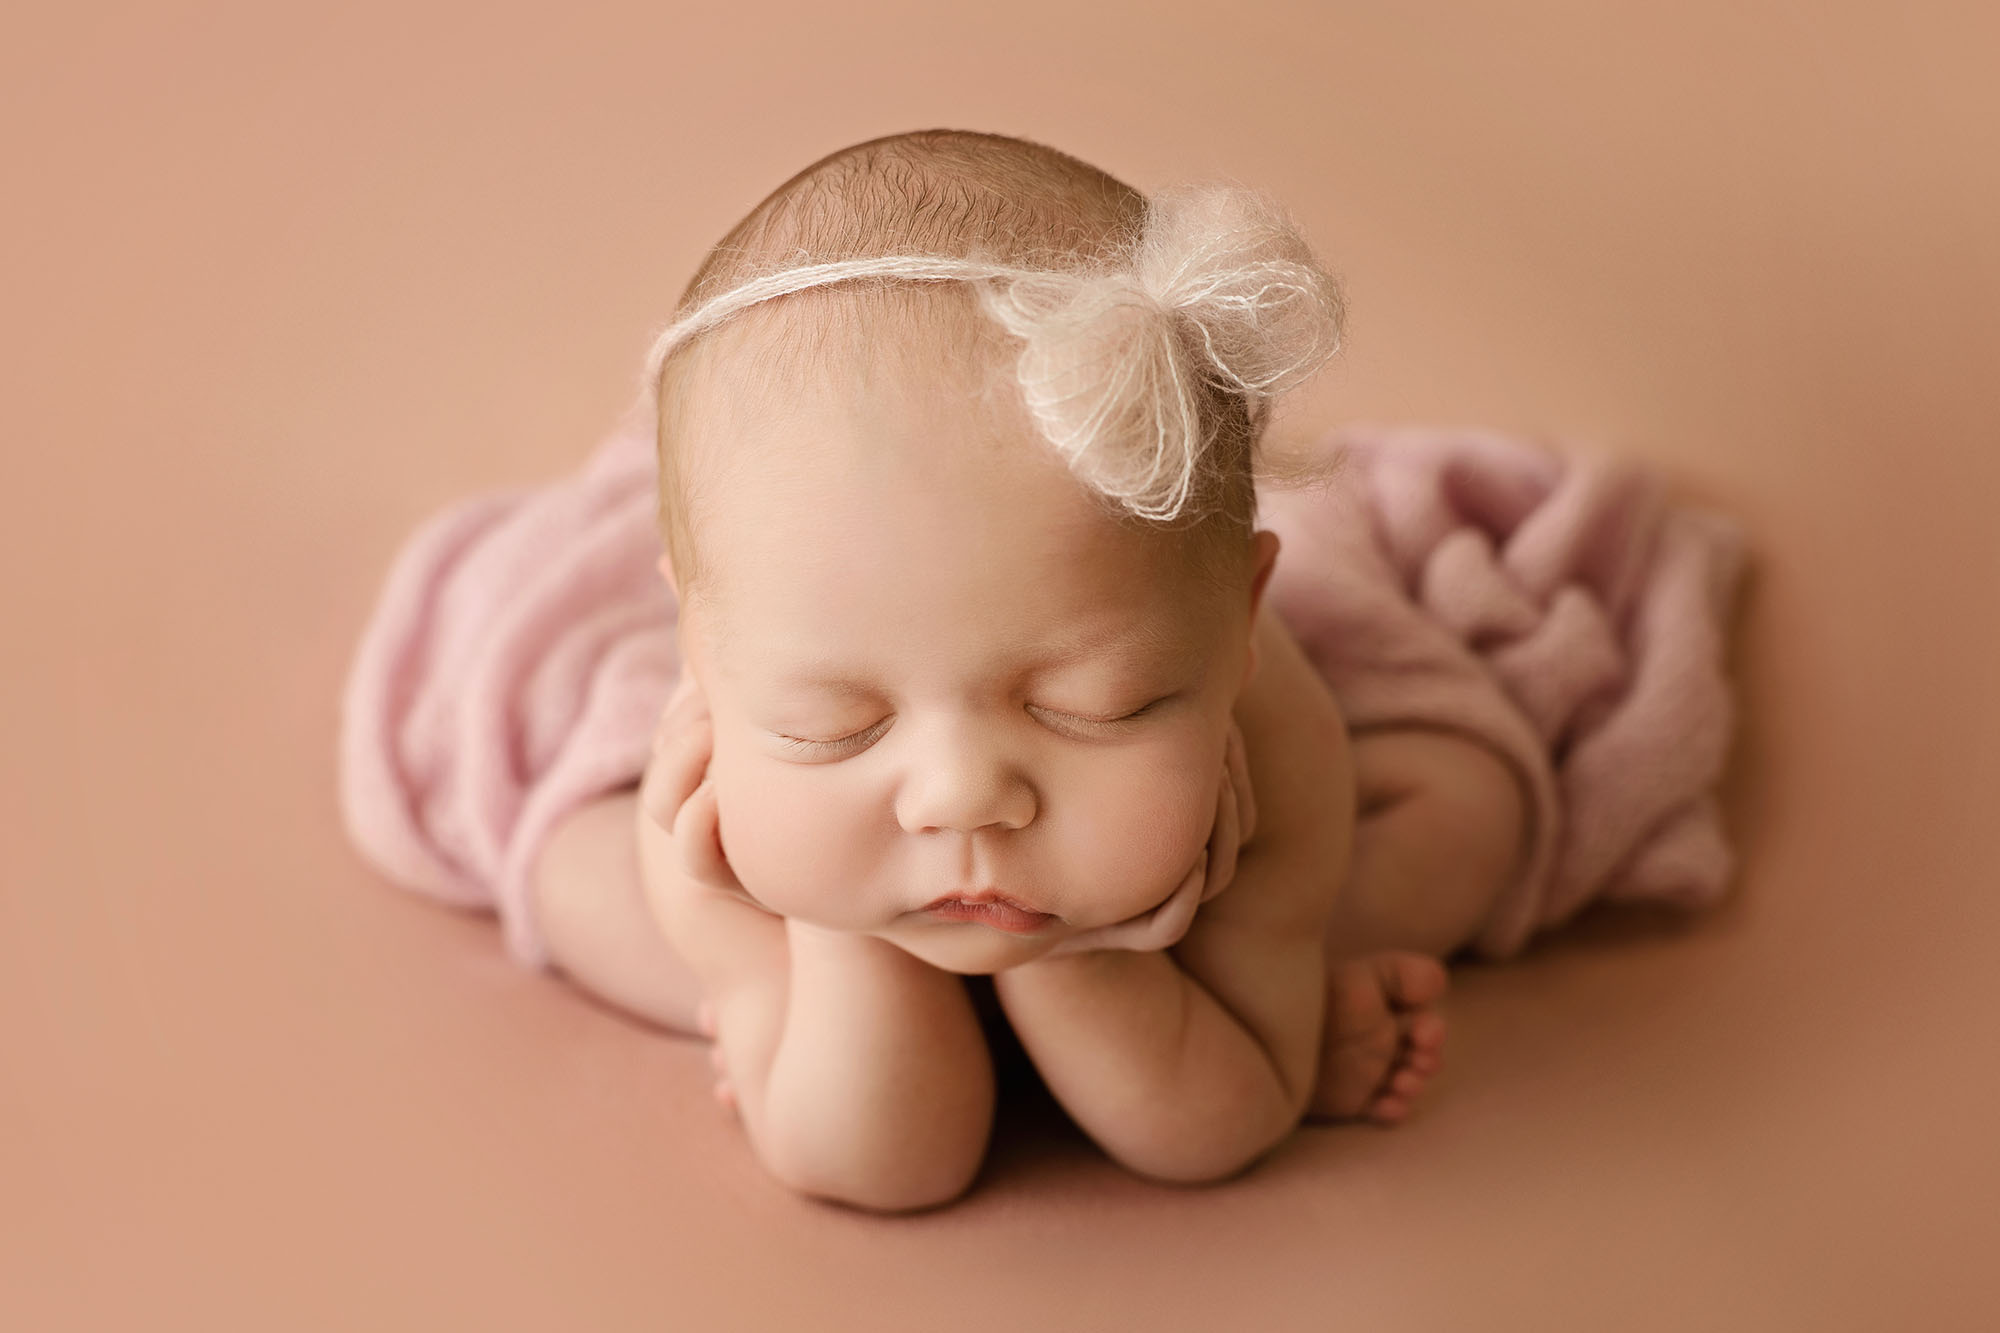 newborn baby girl in froggy pose by newborn photographer edinburgh